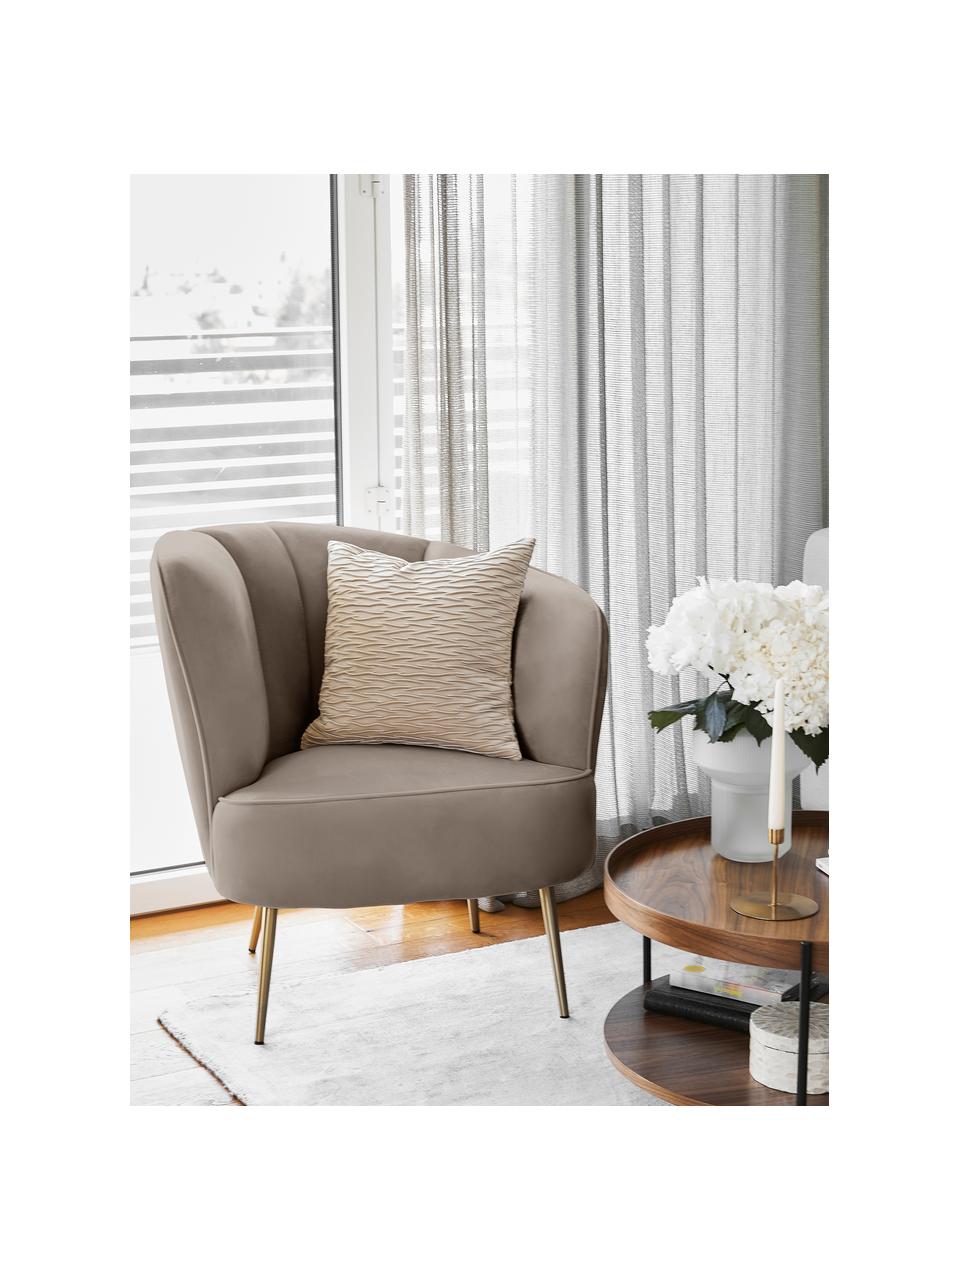 Fluwelen fauteuil Louise in taupe, Bekleding: fluweel (polyester), Poten: gecoat metaal, Fluweel taupe, B 76 x D 75 cm